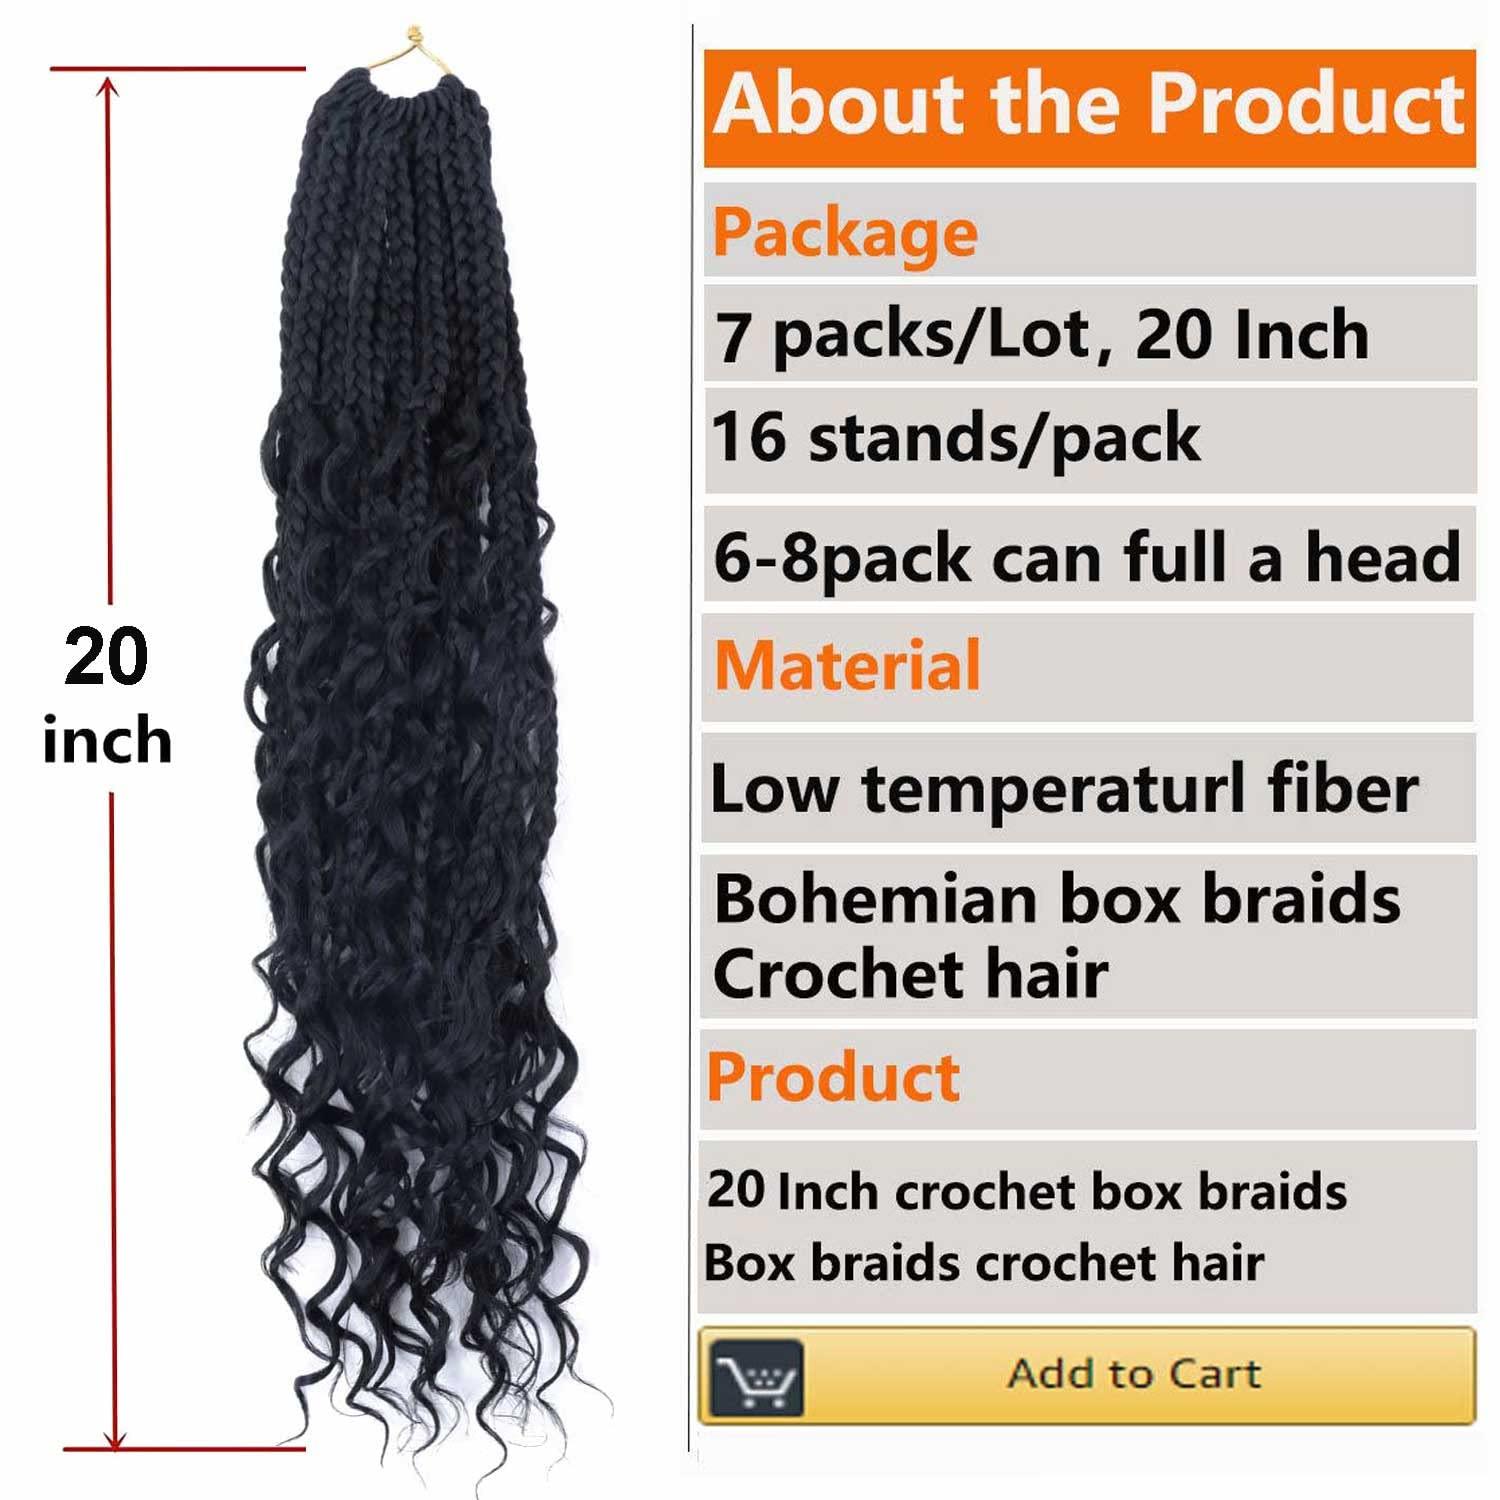 10 inch Box Braid Crochet Hair Extensions, Human Hair Extensions with Curly Ends 6 Packs Crochet Box Braids Extensions Crochet Box Braid Hair for